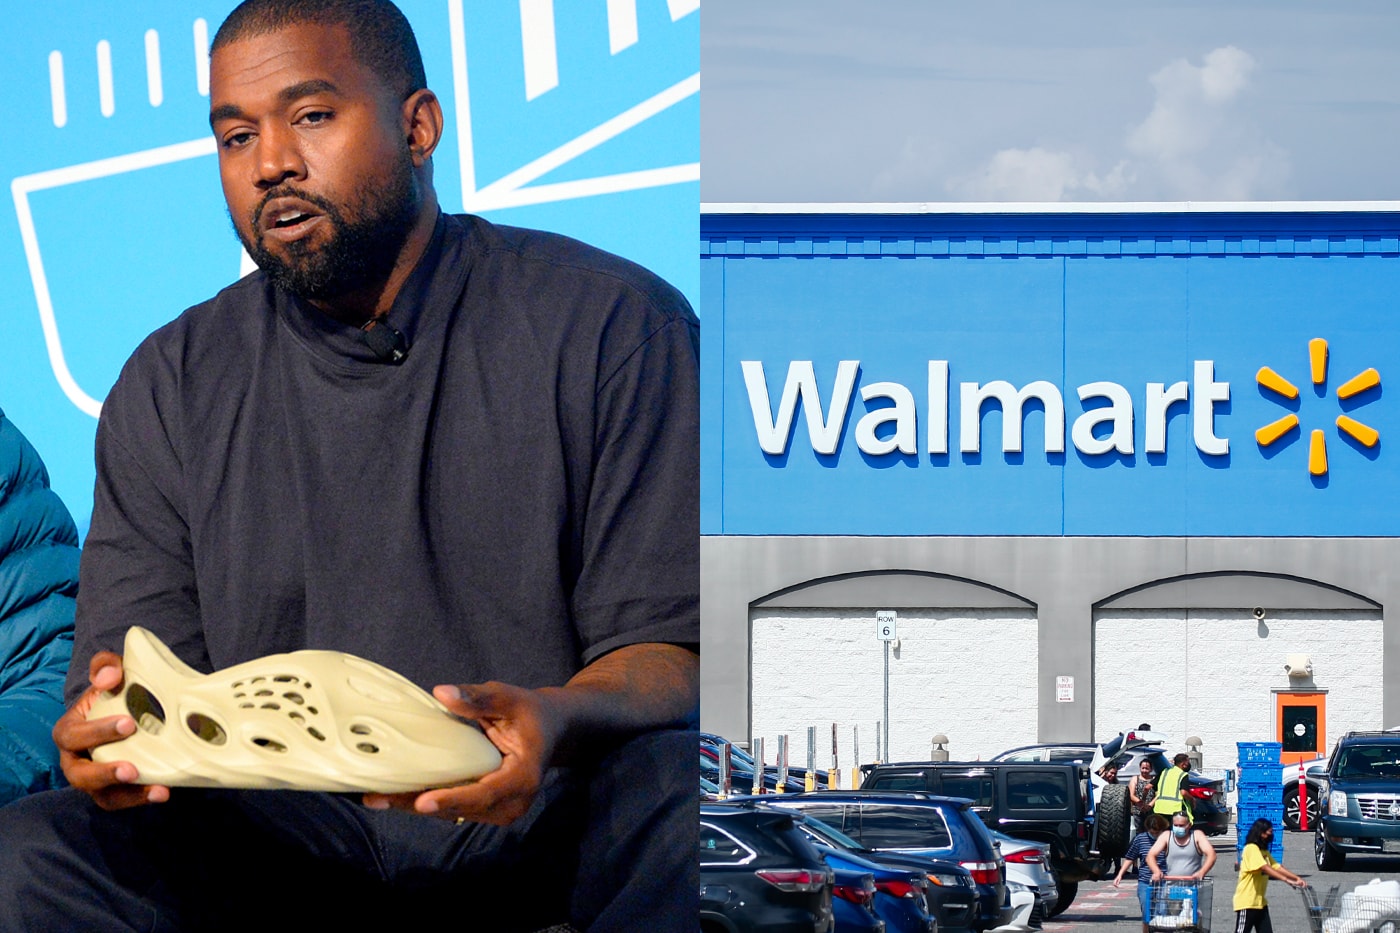 Walmart 在 Kanye West 訴訟後下架「山寨 YEEZY Foam Runner」